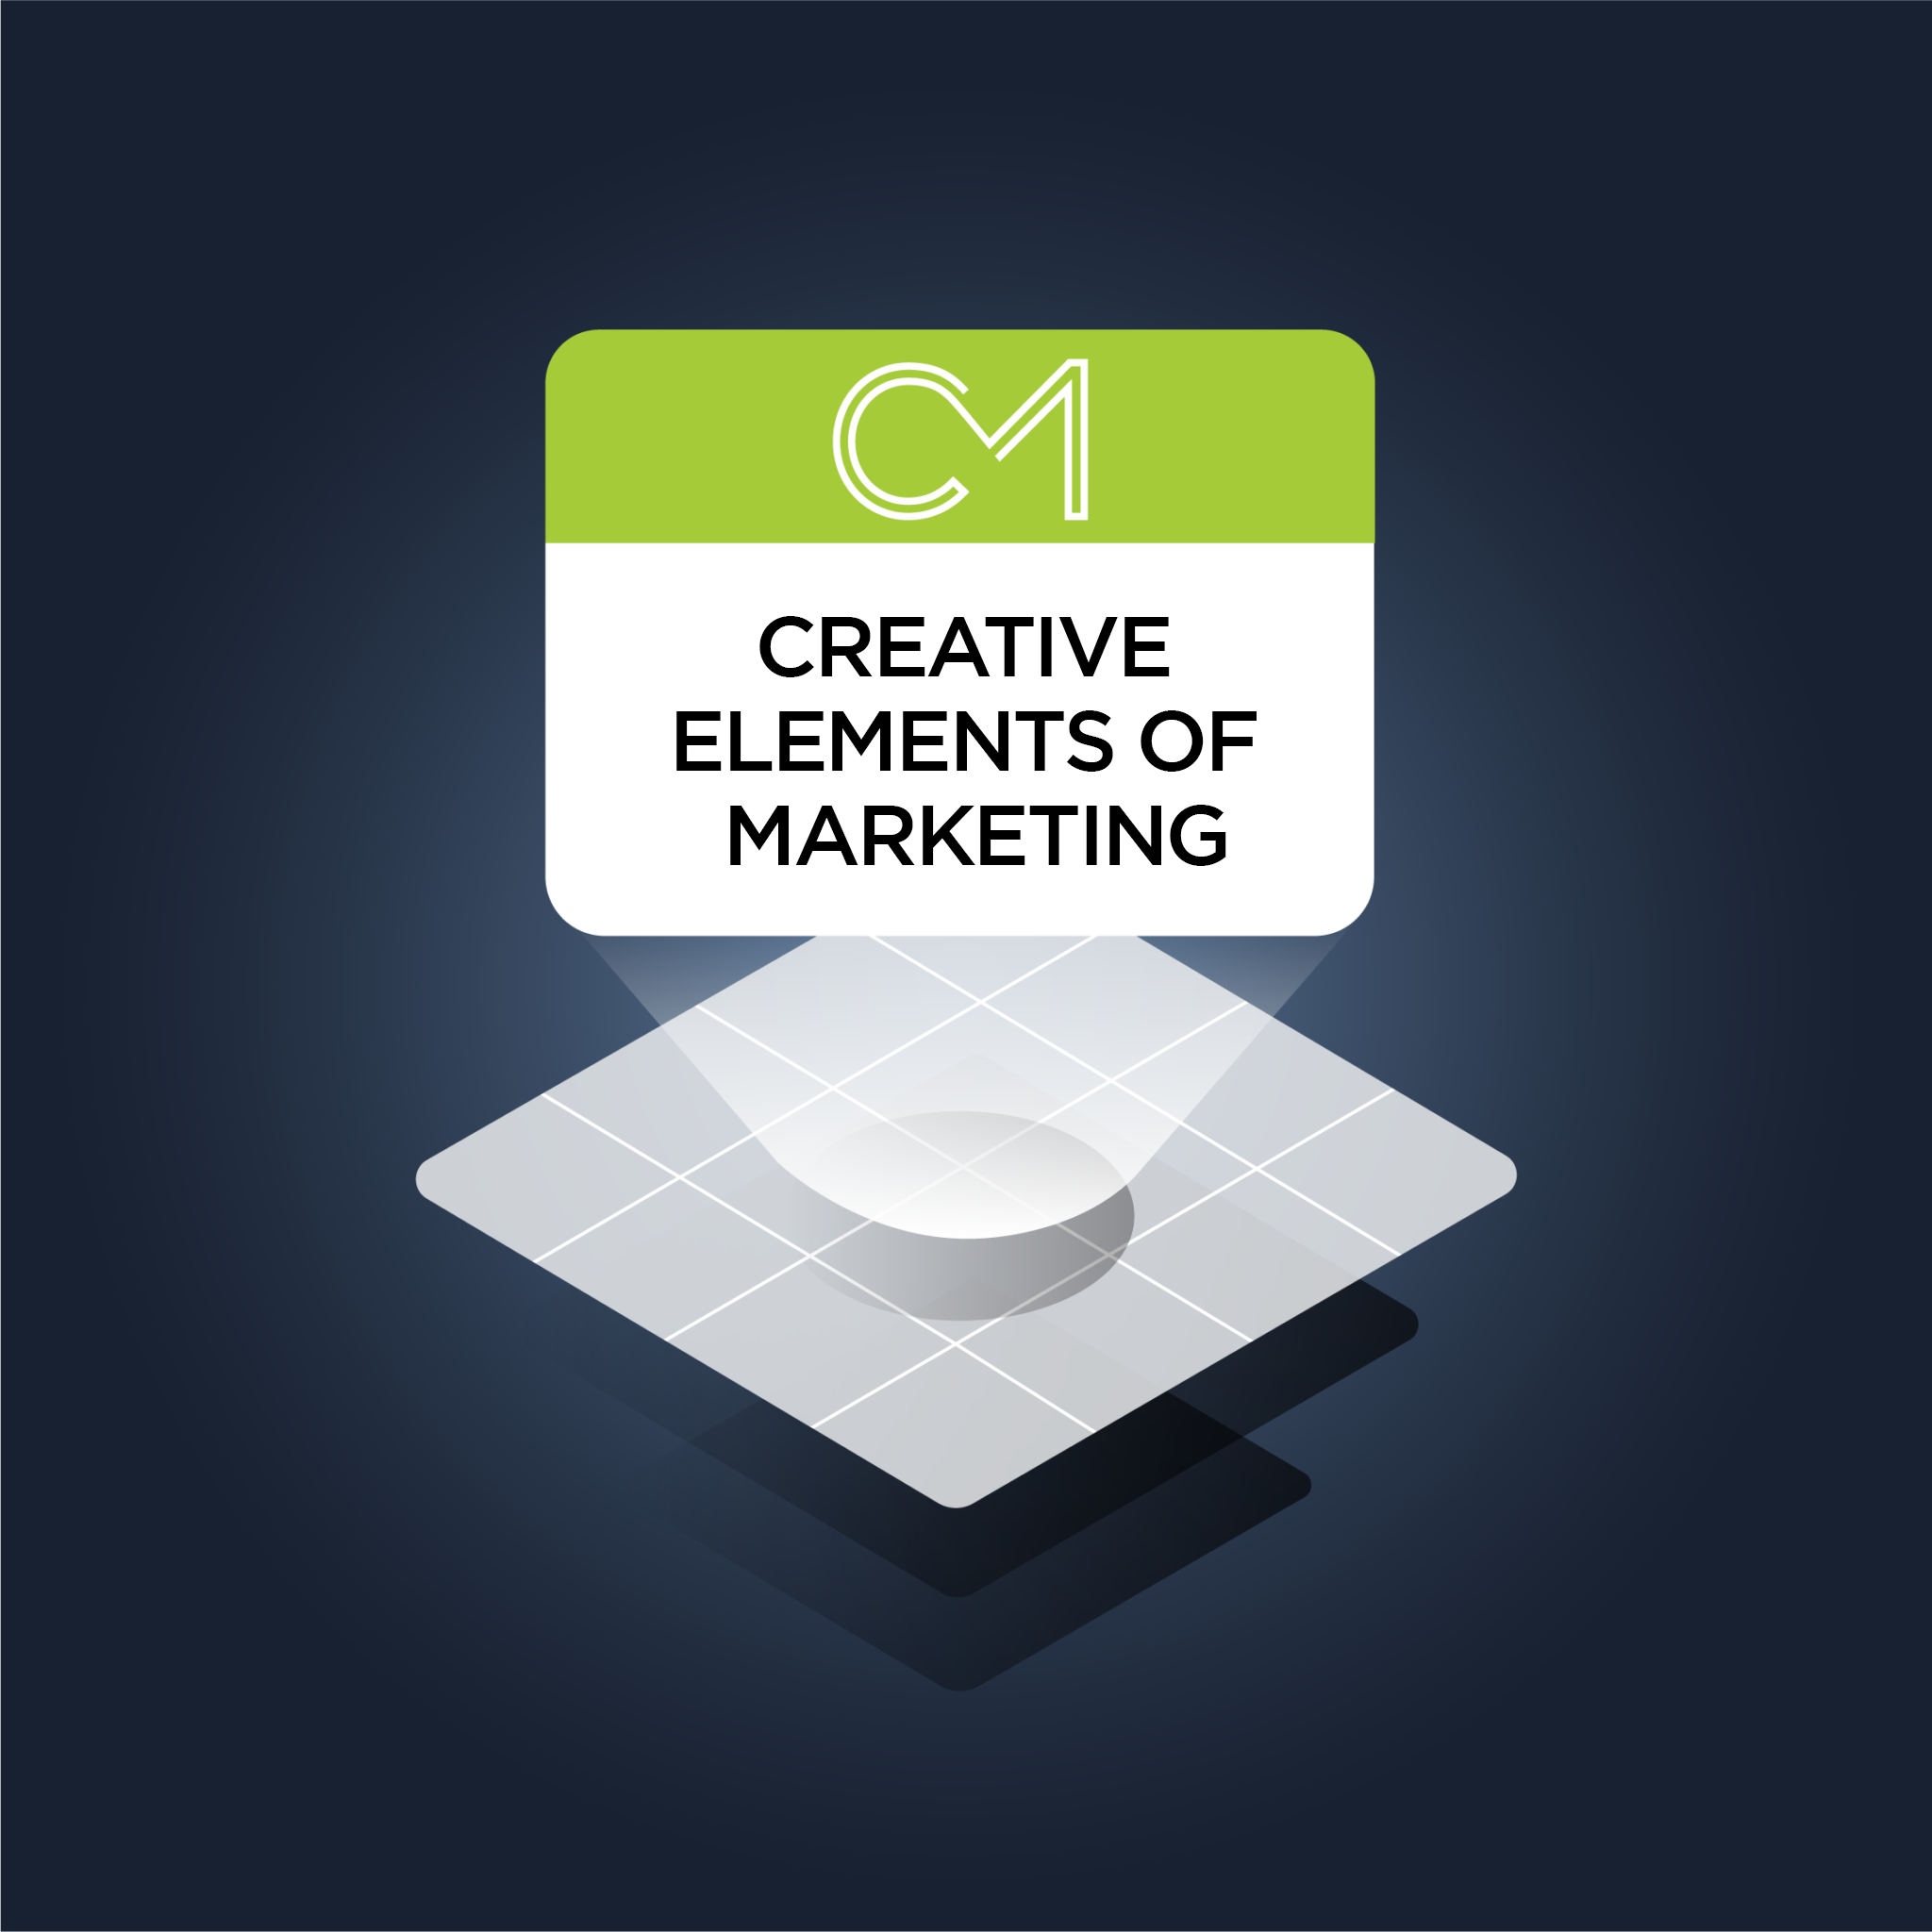 CM Creative Elements of Marketing